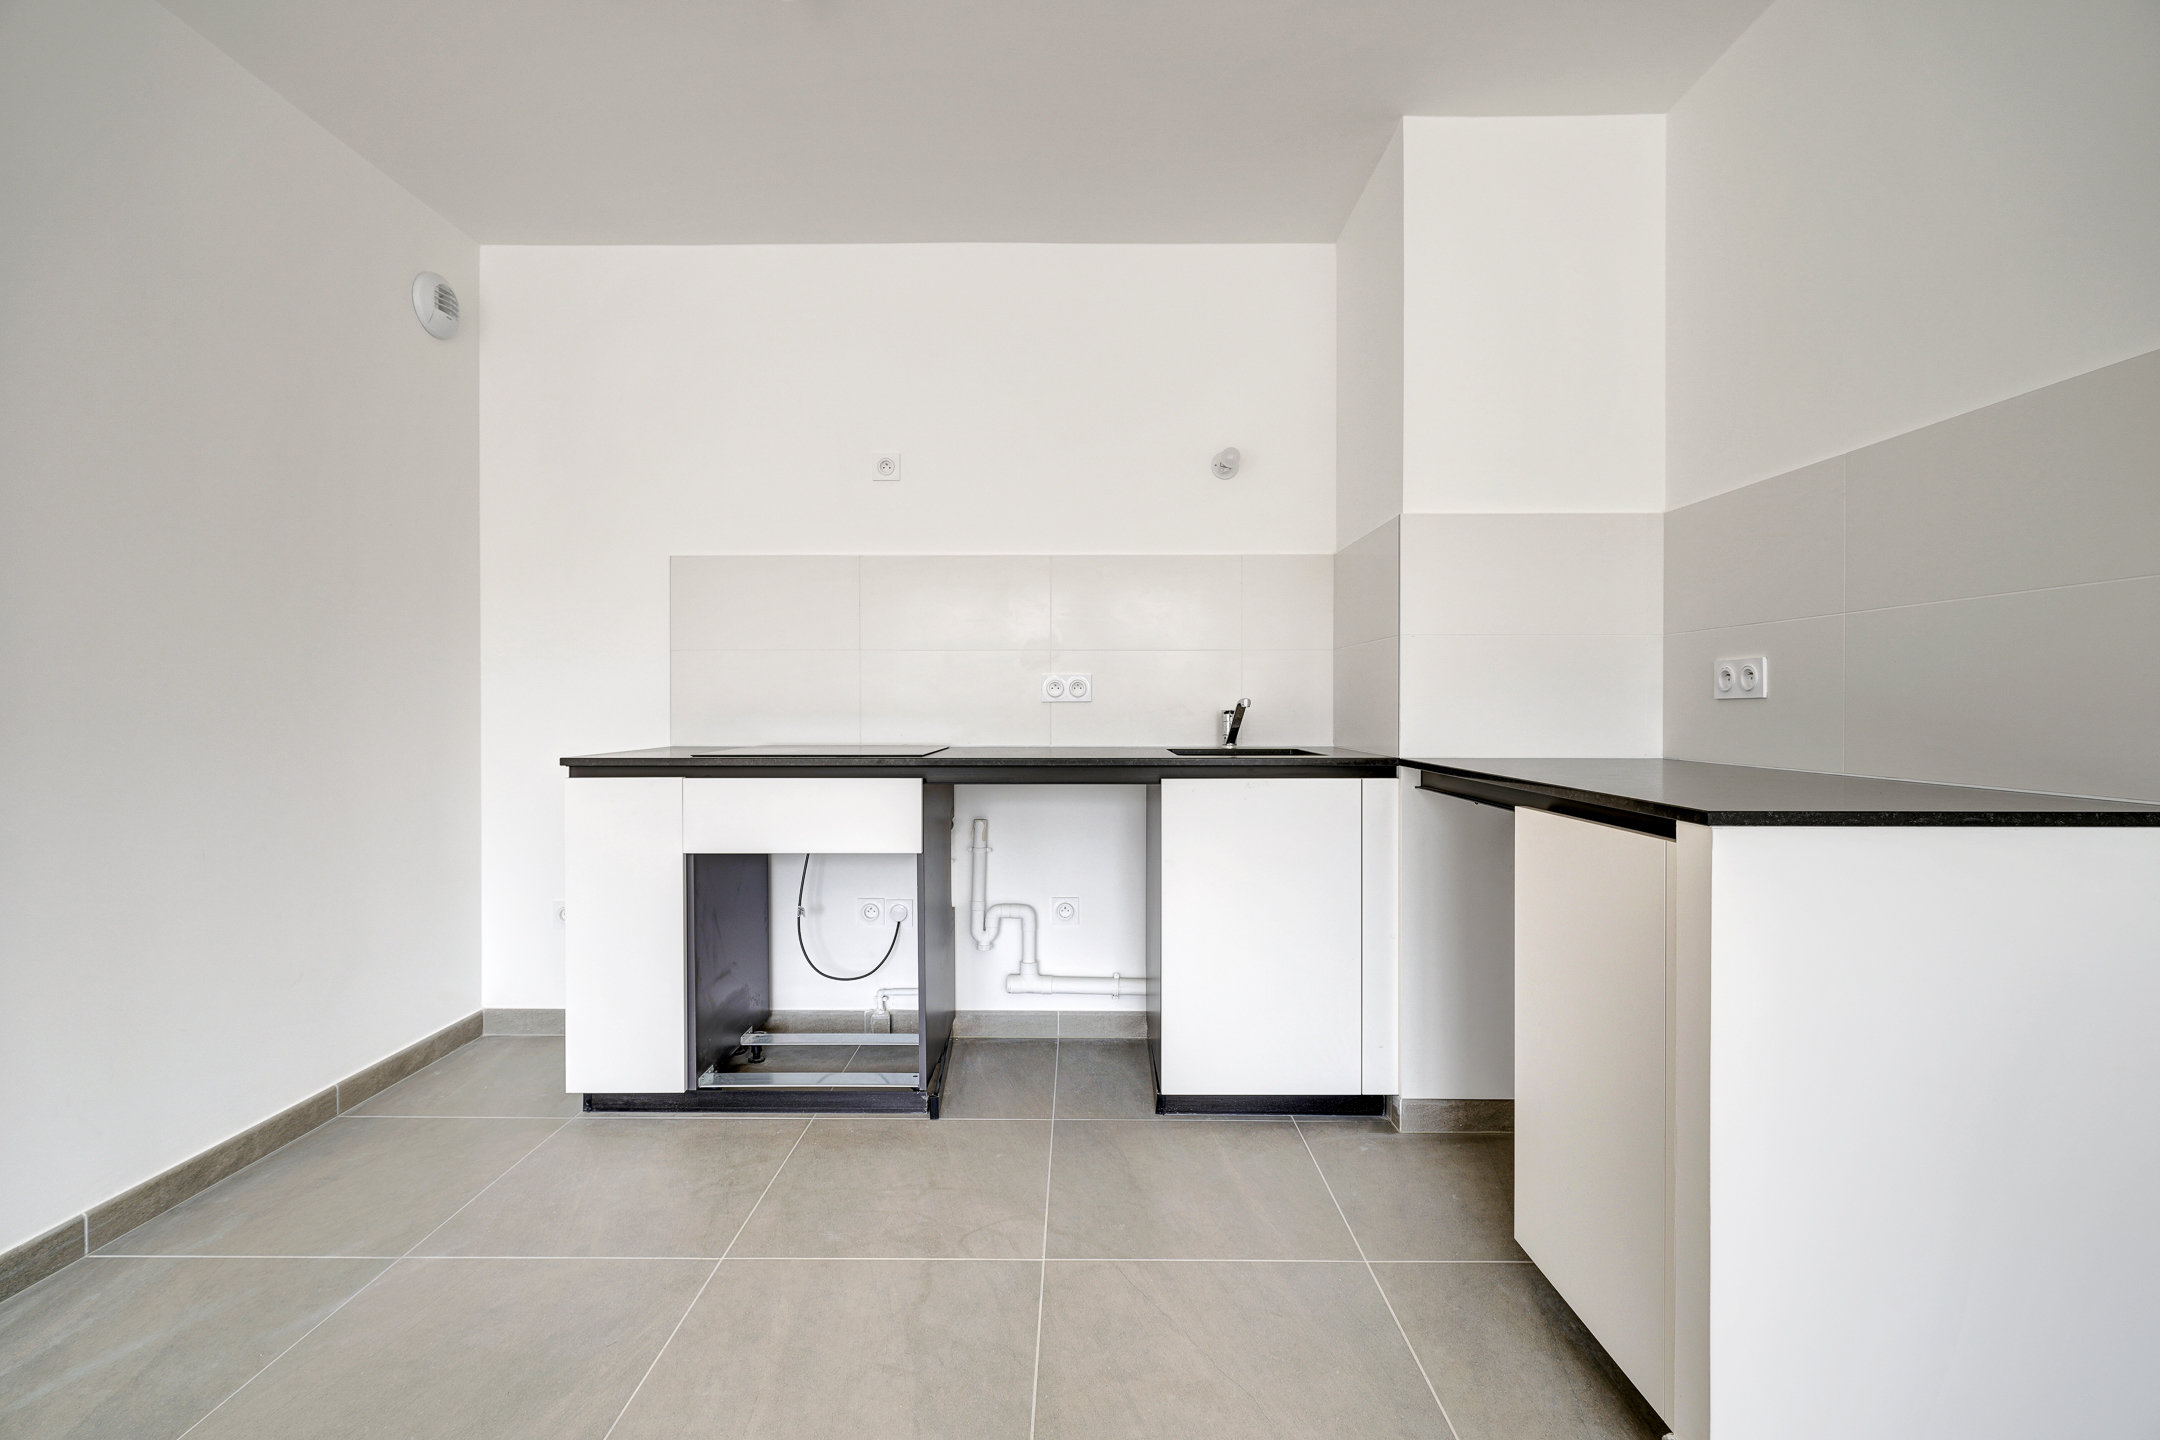 Appartement a louer ville-d'avray - 2 pièce(s) - 49.12 m2 - Surfyn